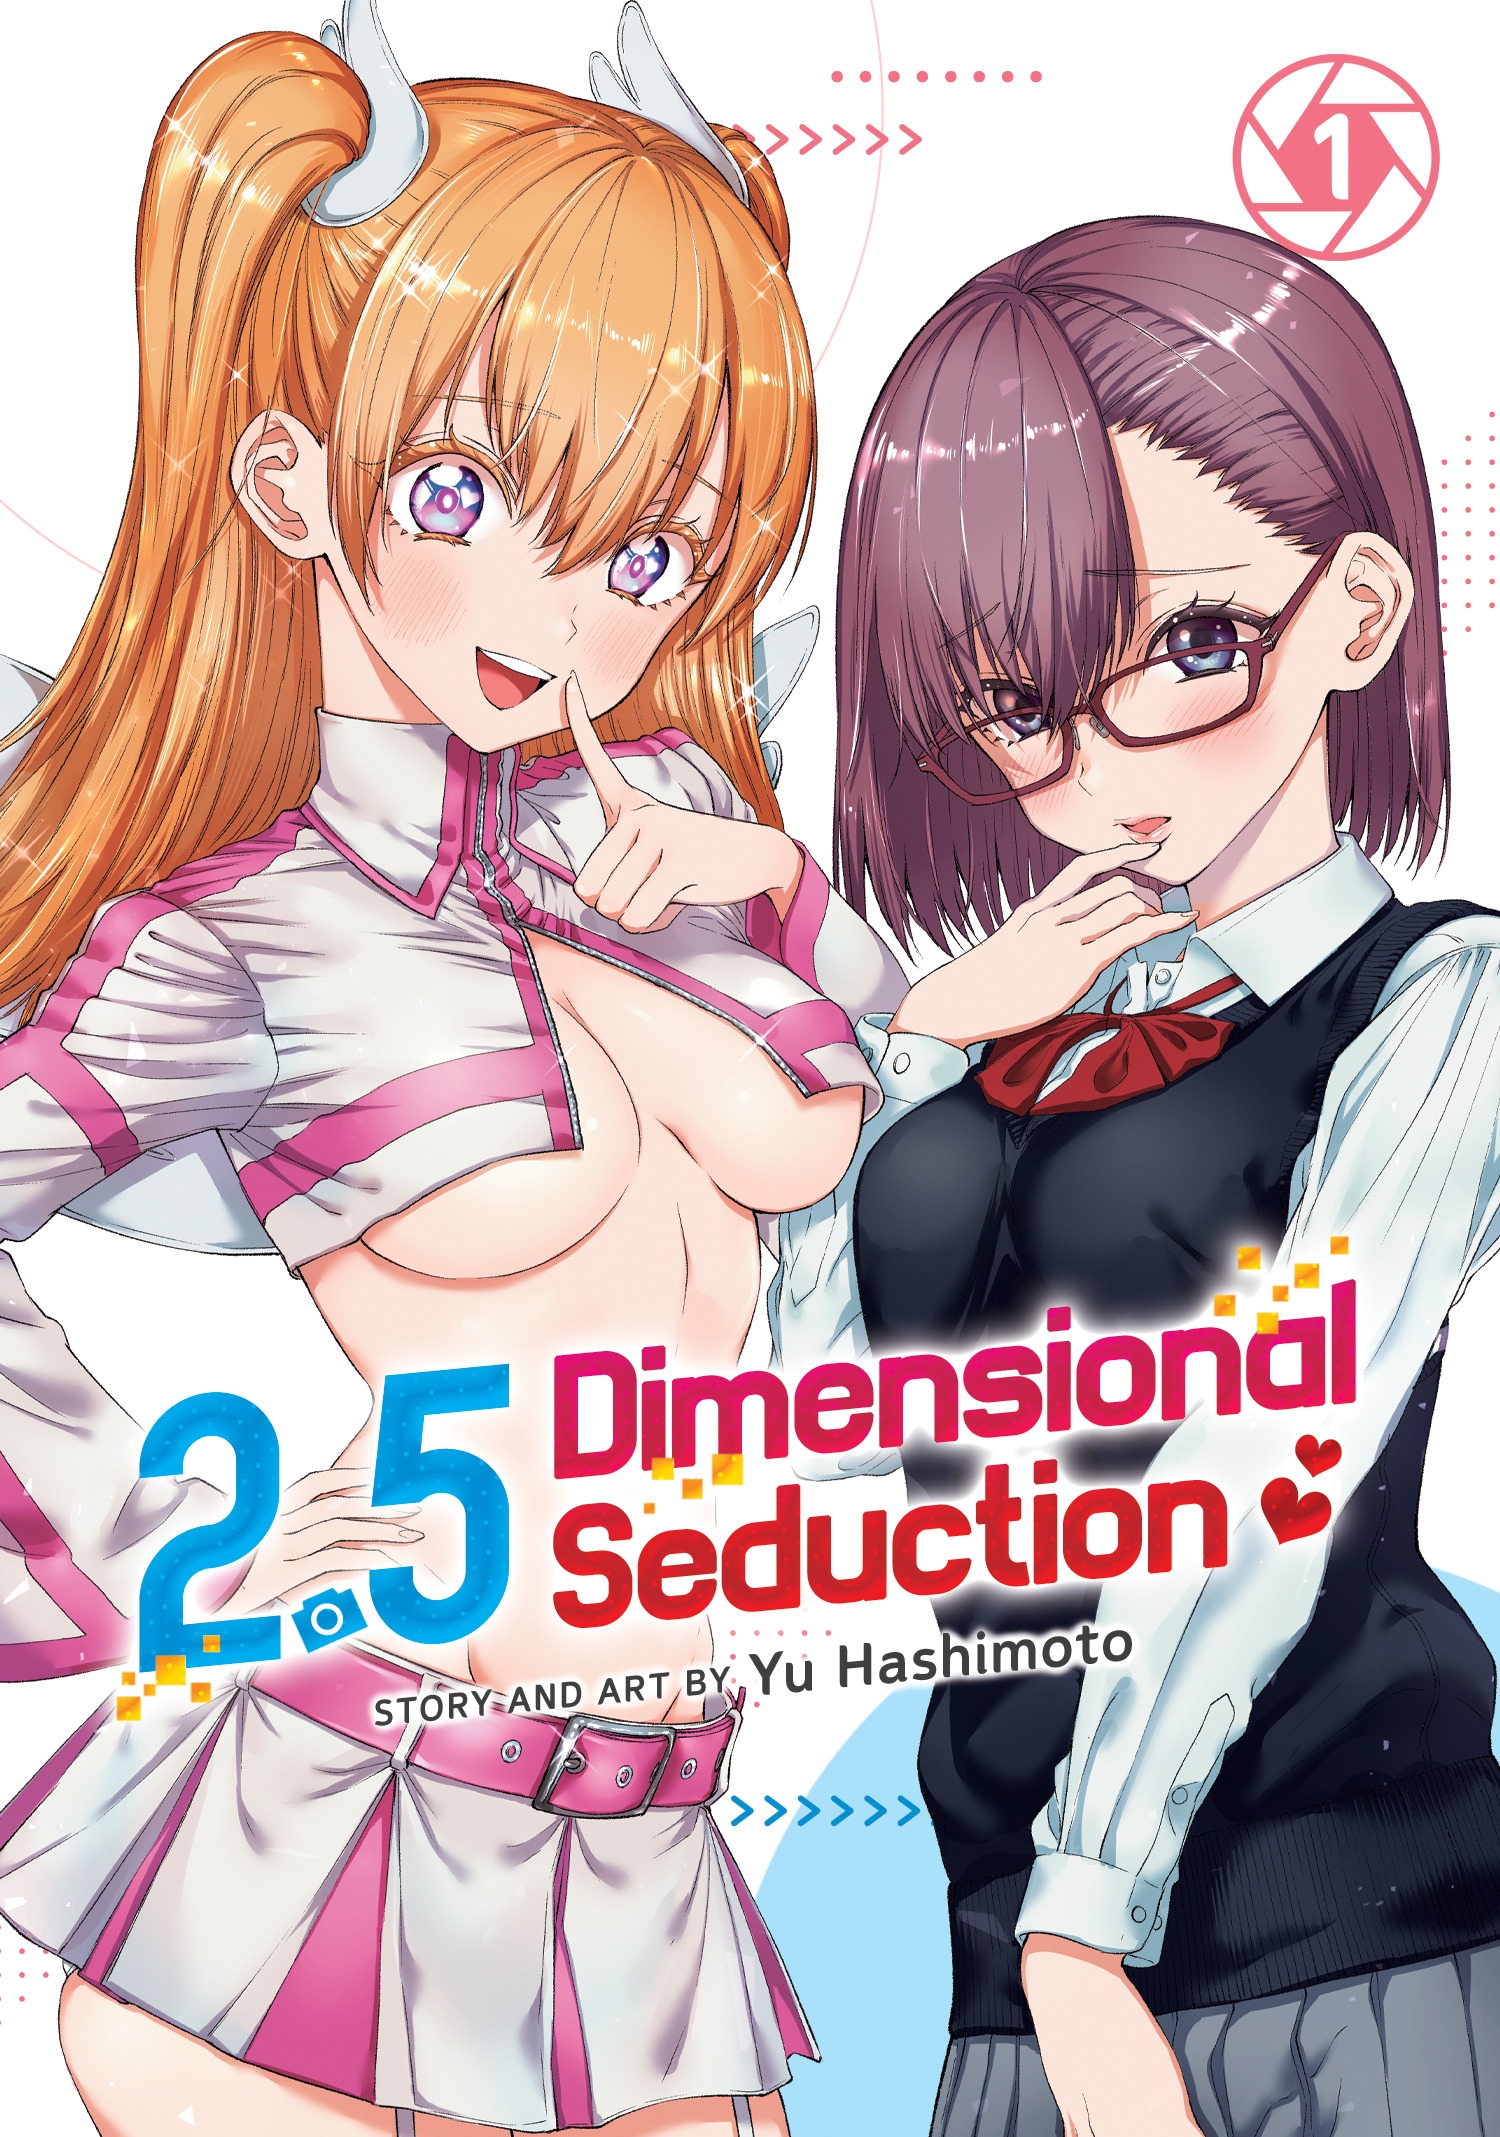 2.5 Dimensional Seduction by Yuu Hashimoto, an ecchi harem comedy.